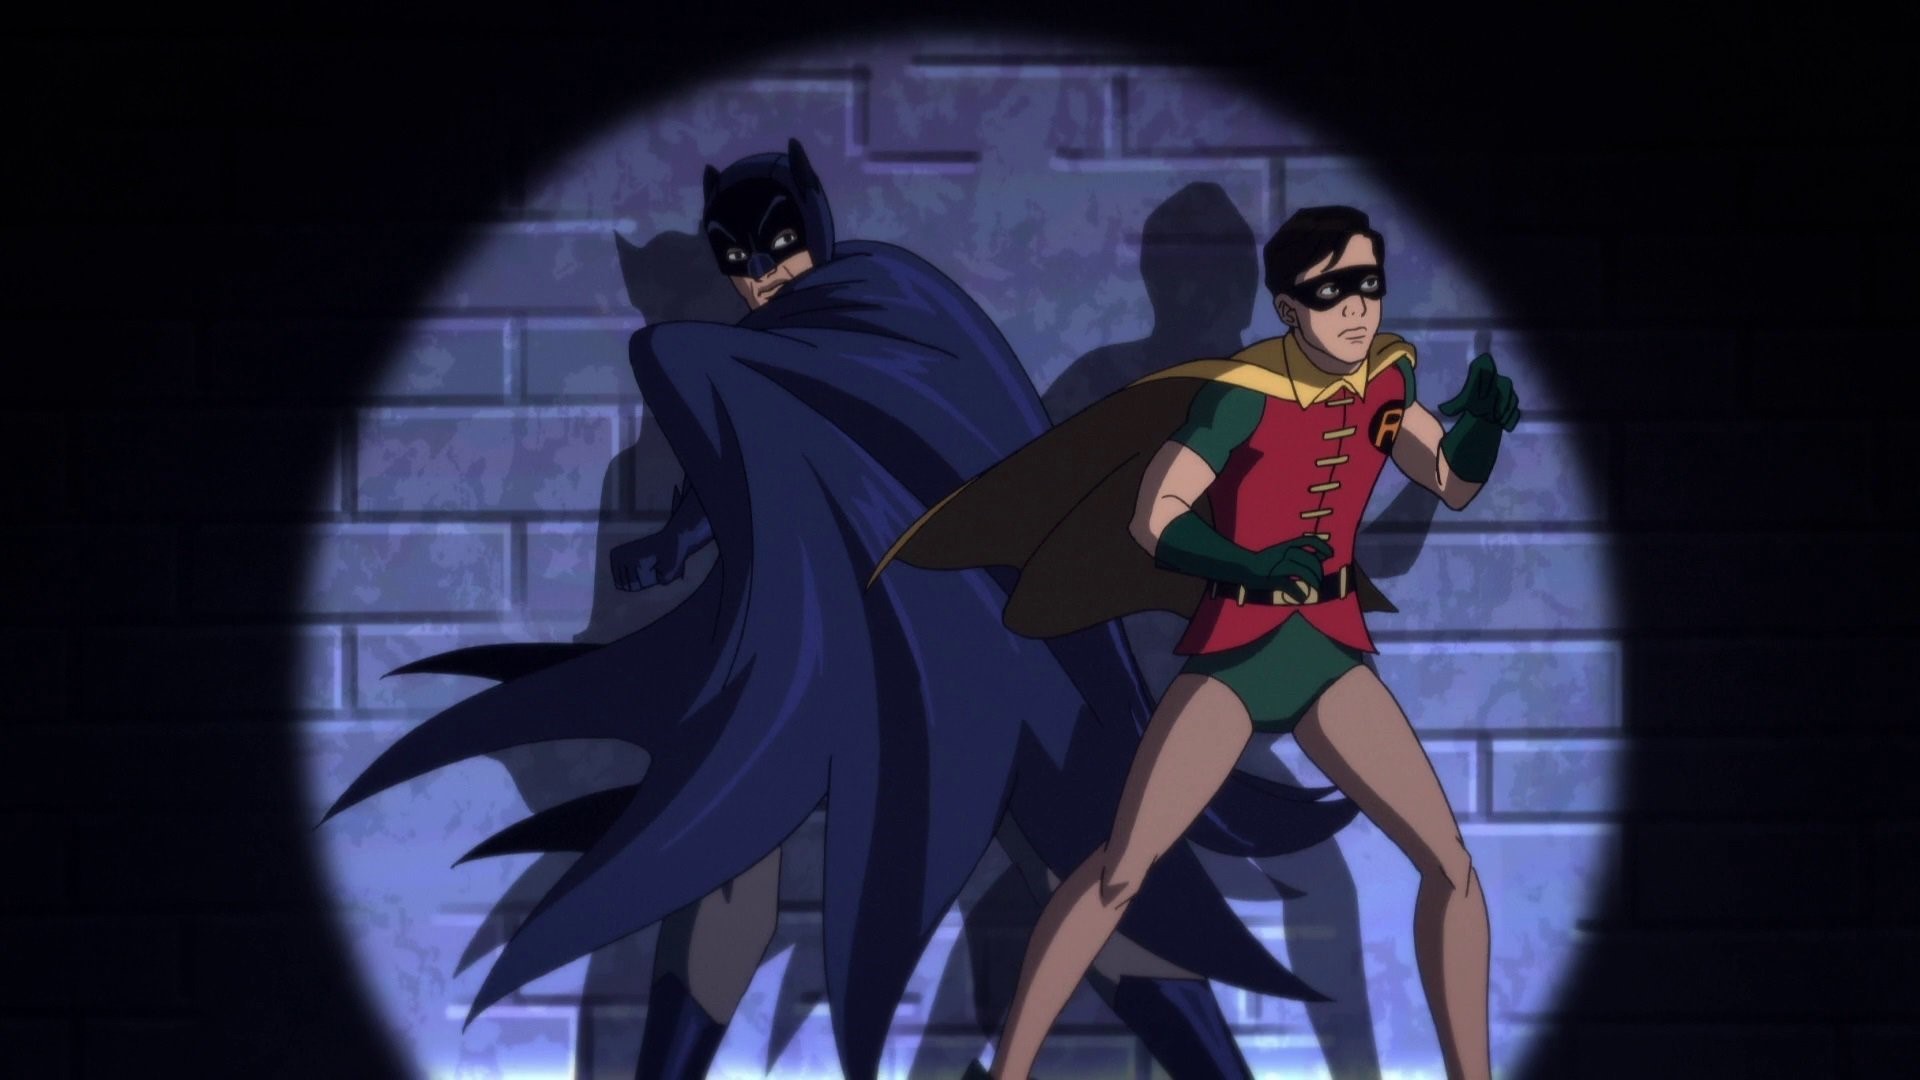 Batman and Robin in Batman vs. Two-Face (2017)